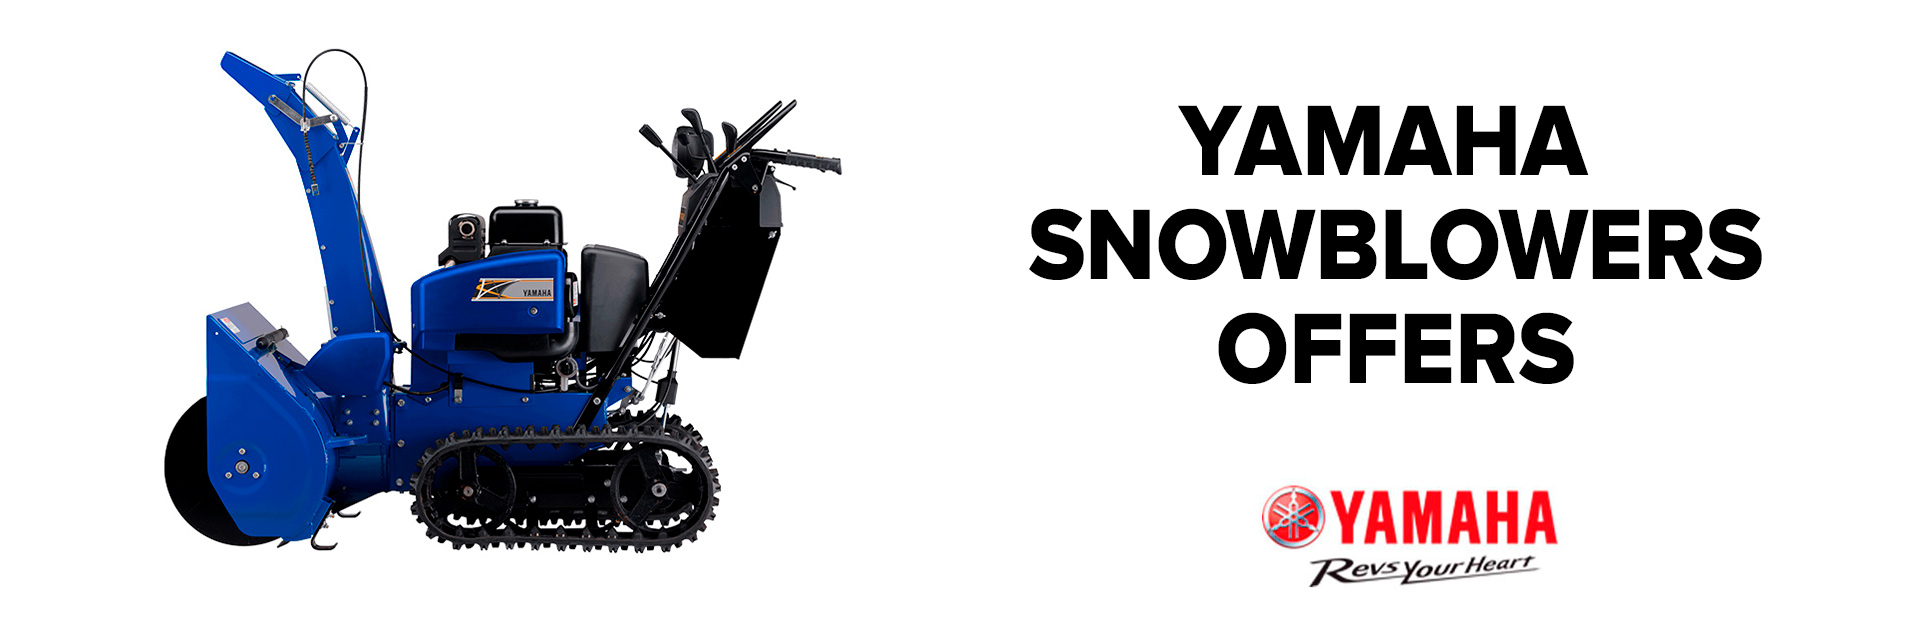 Yamaha Snowblowers Offers